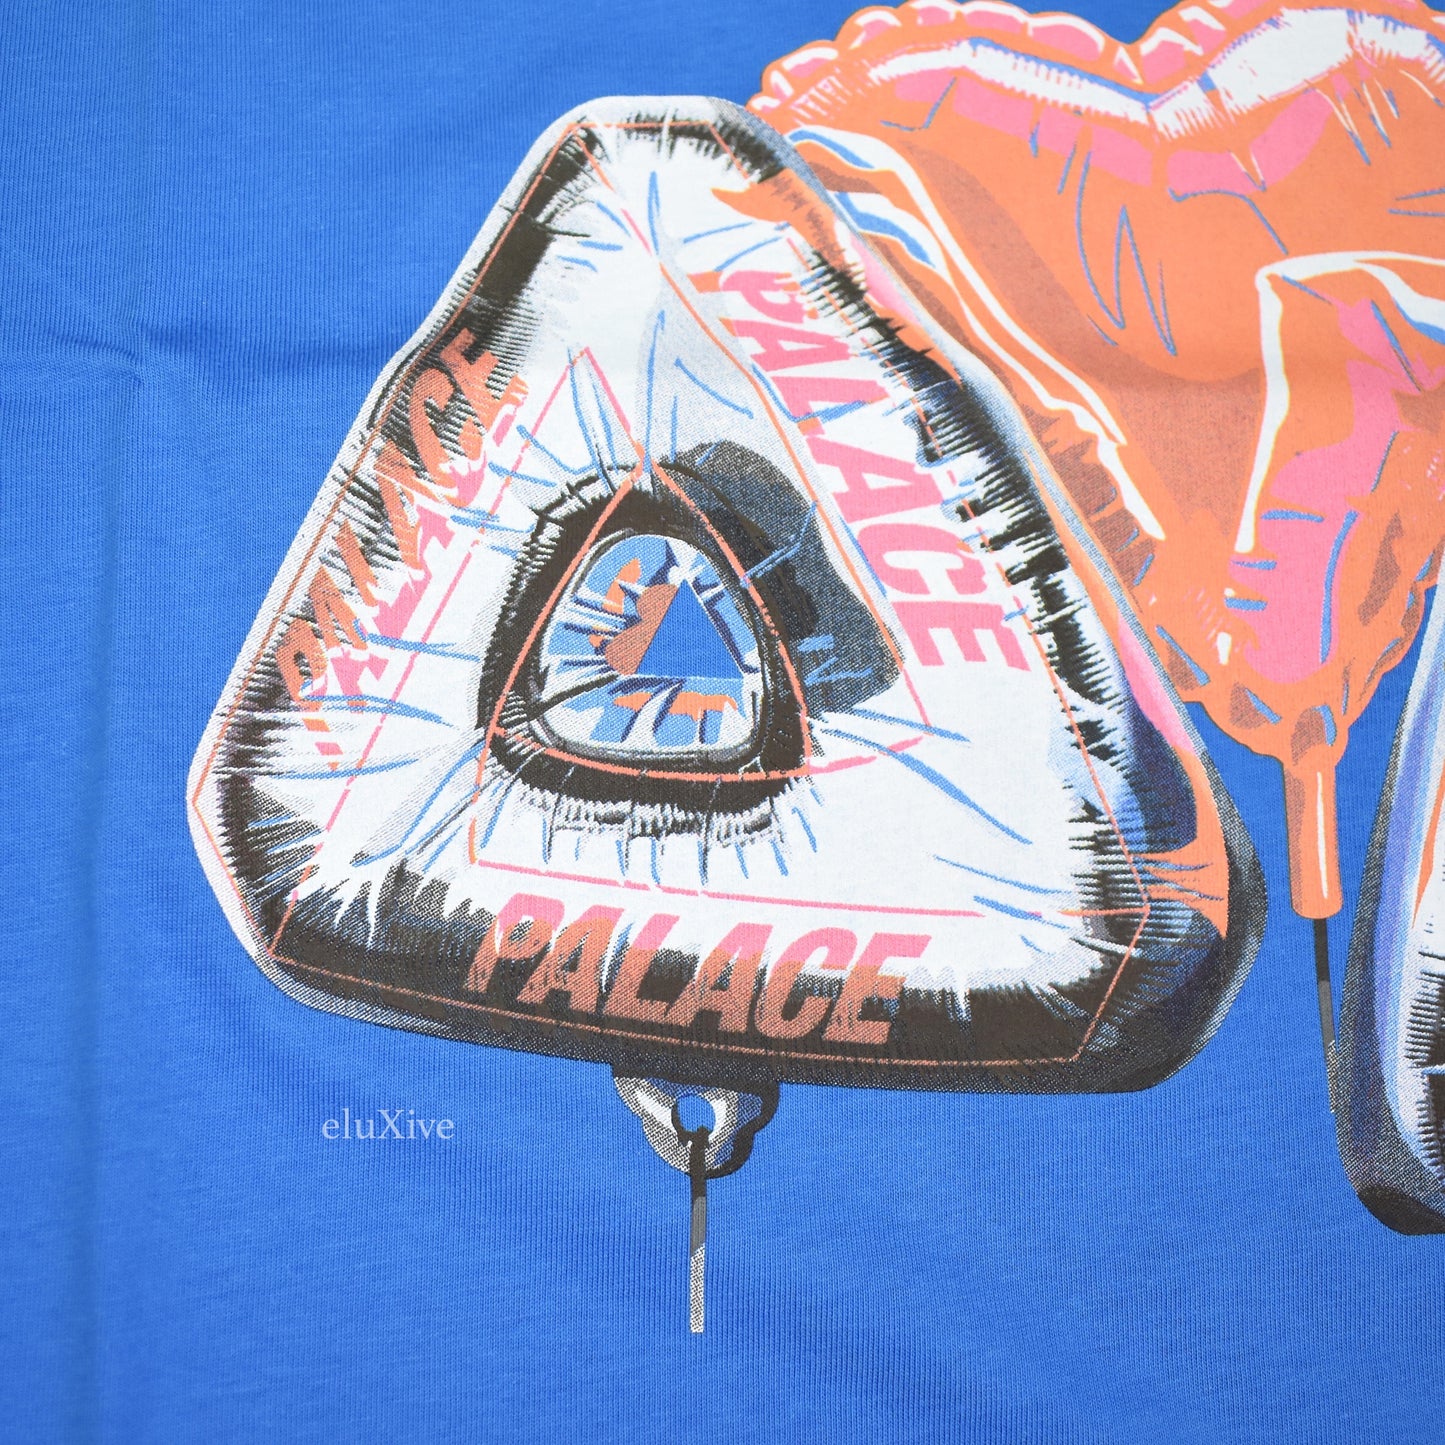 Palace - Inflator Balloon Logo T-Shirt (Blue)